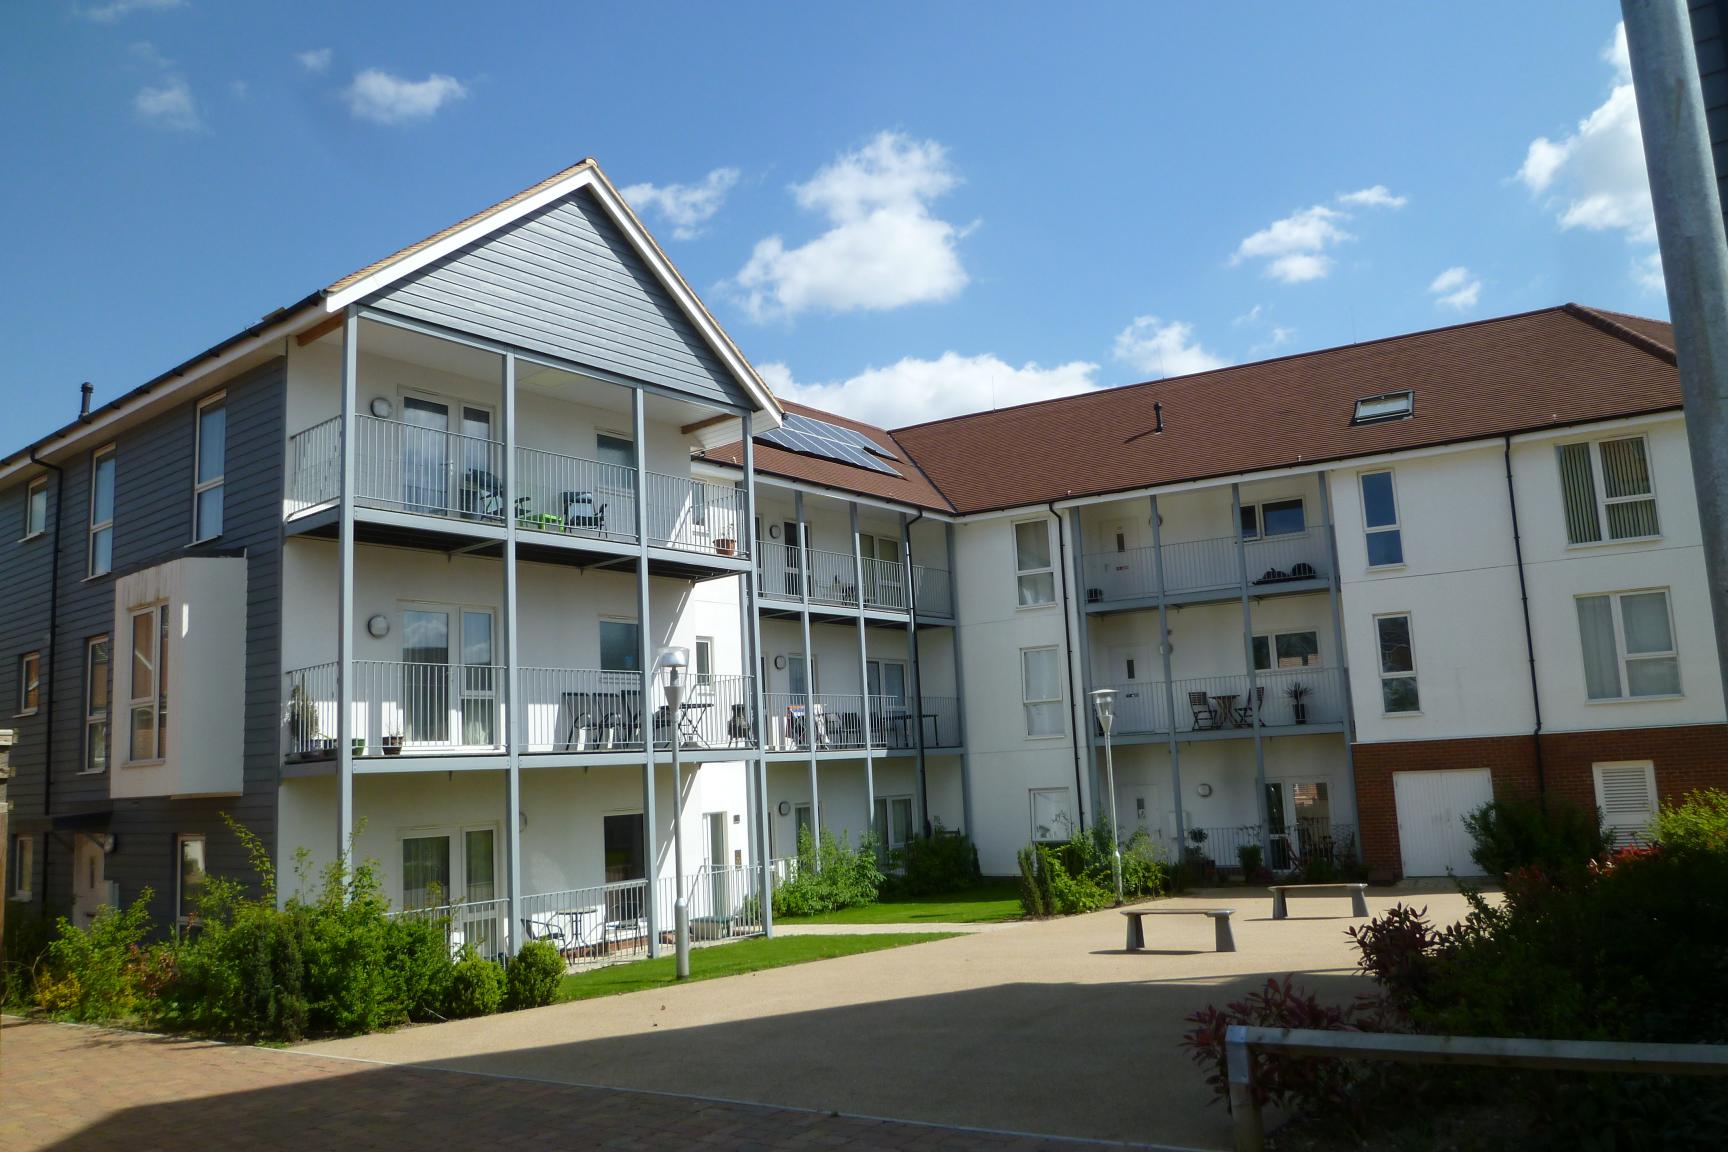 Neighbourly balconies on social scheme